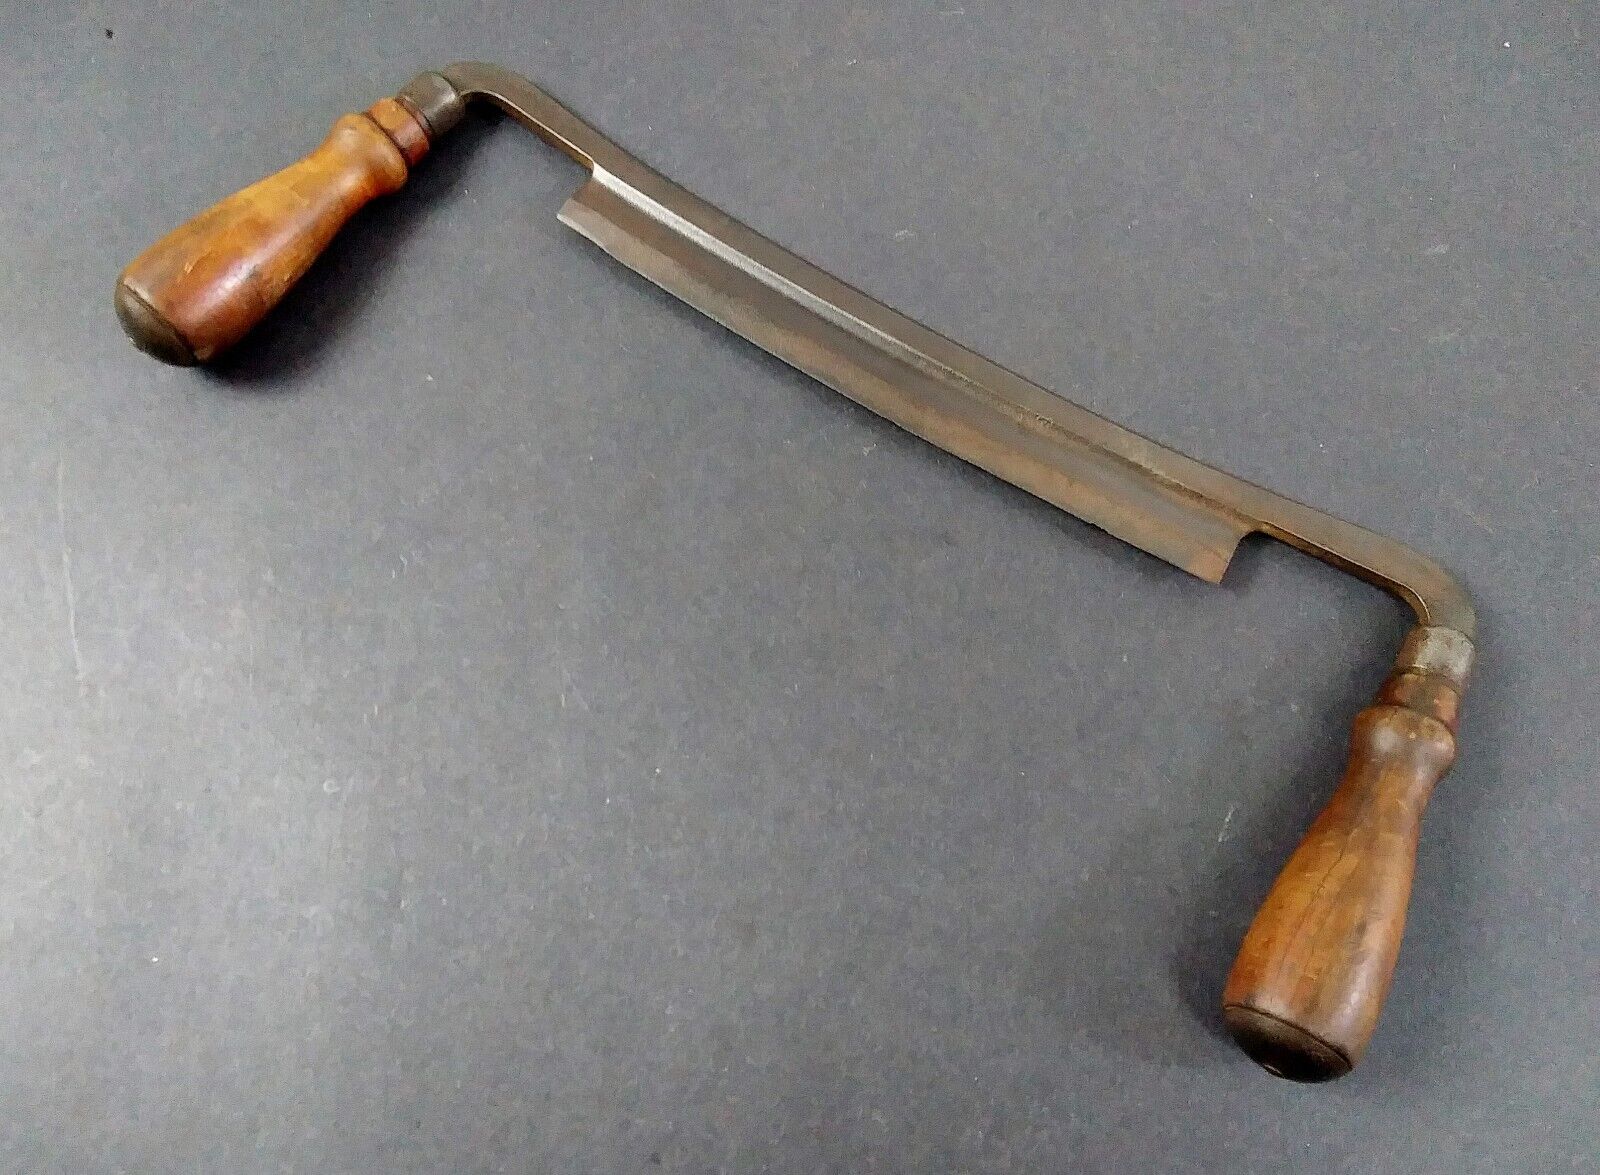 Antique Tools Drawknife Vintage Woodworking Spokeshave Knife